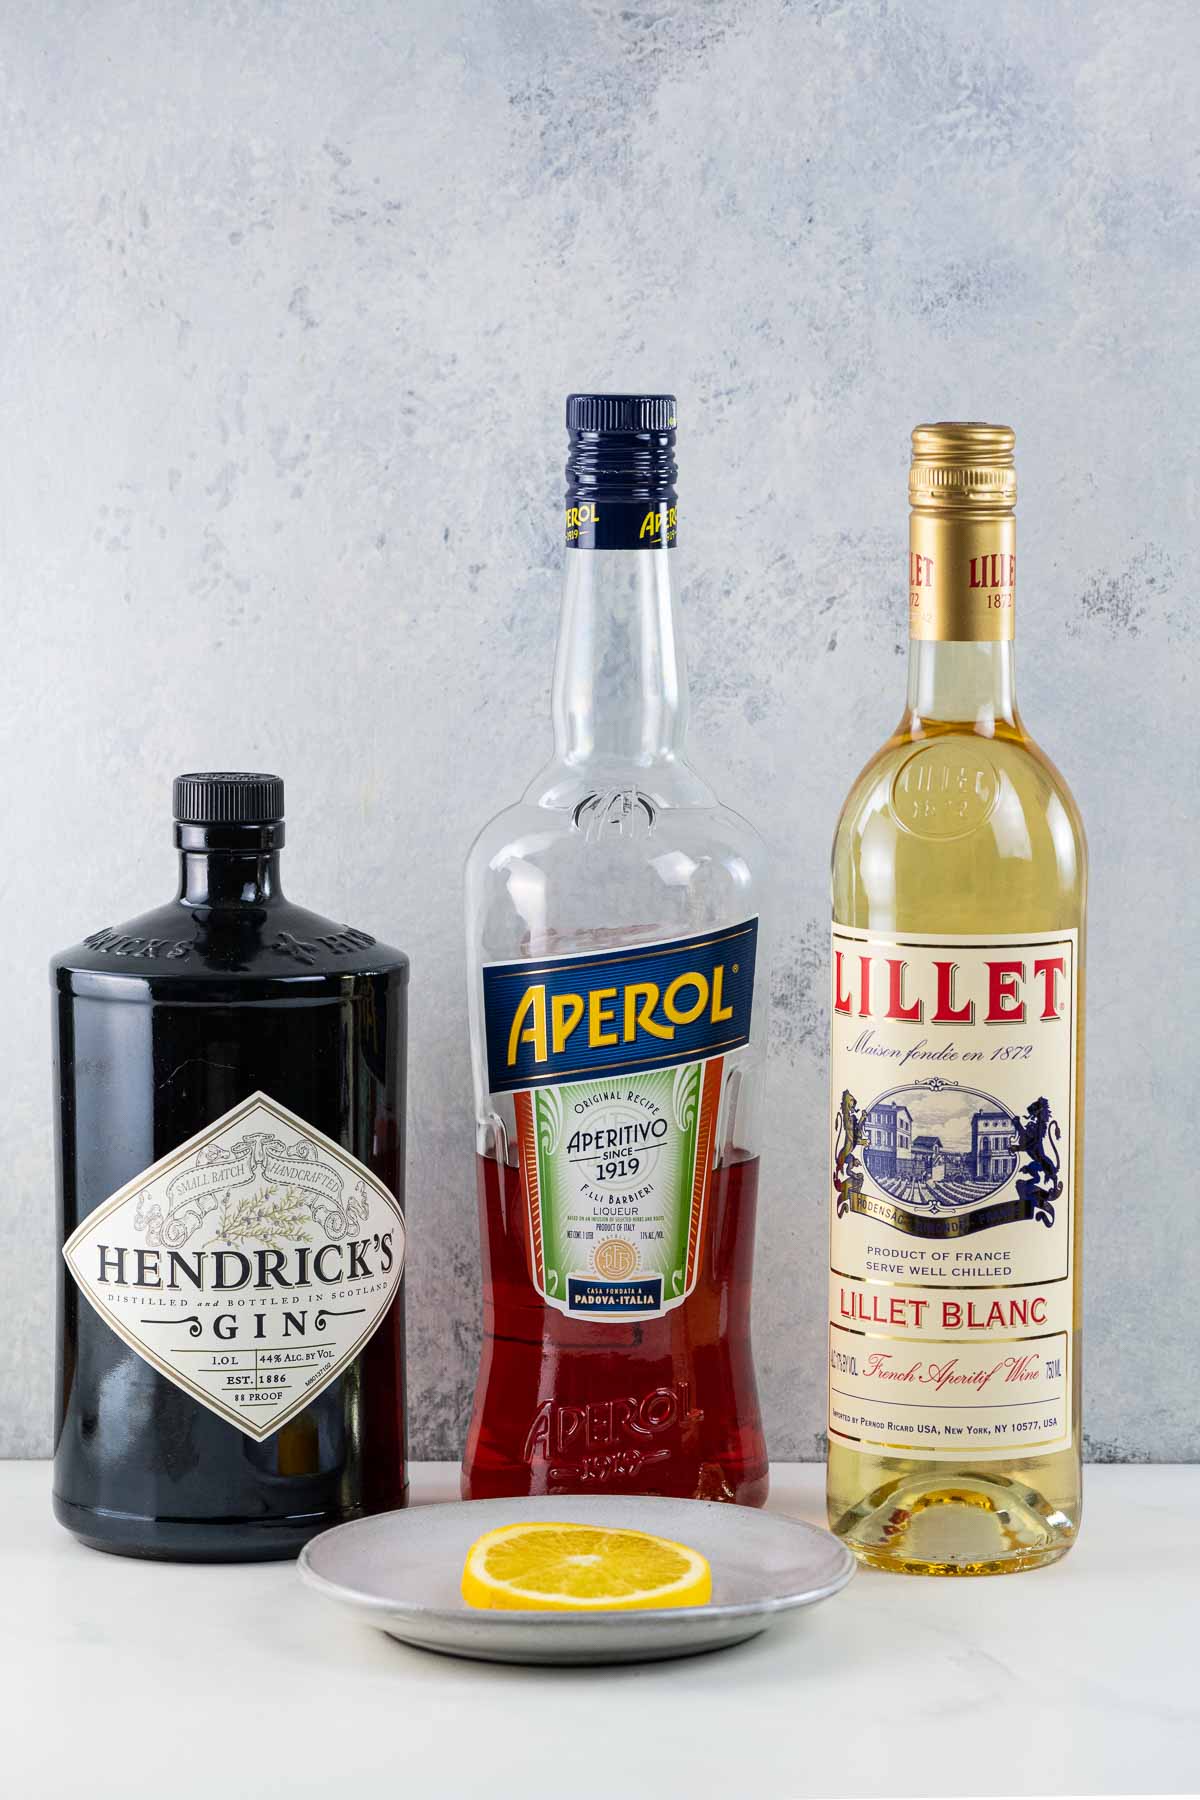 unusual negroni ingredients: hendricks gin, aperol, lillet blanc, and an orange slice